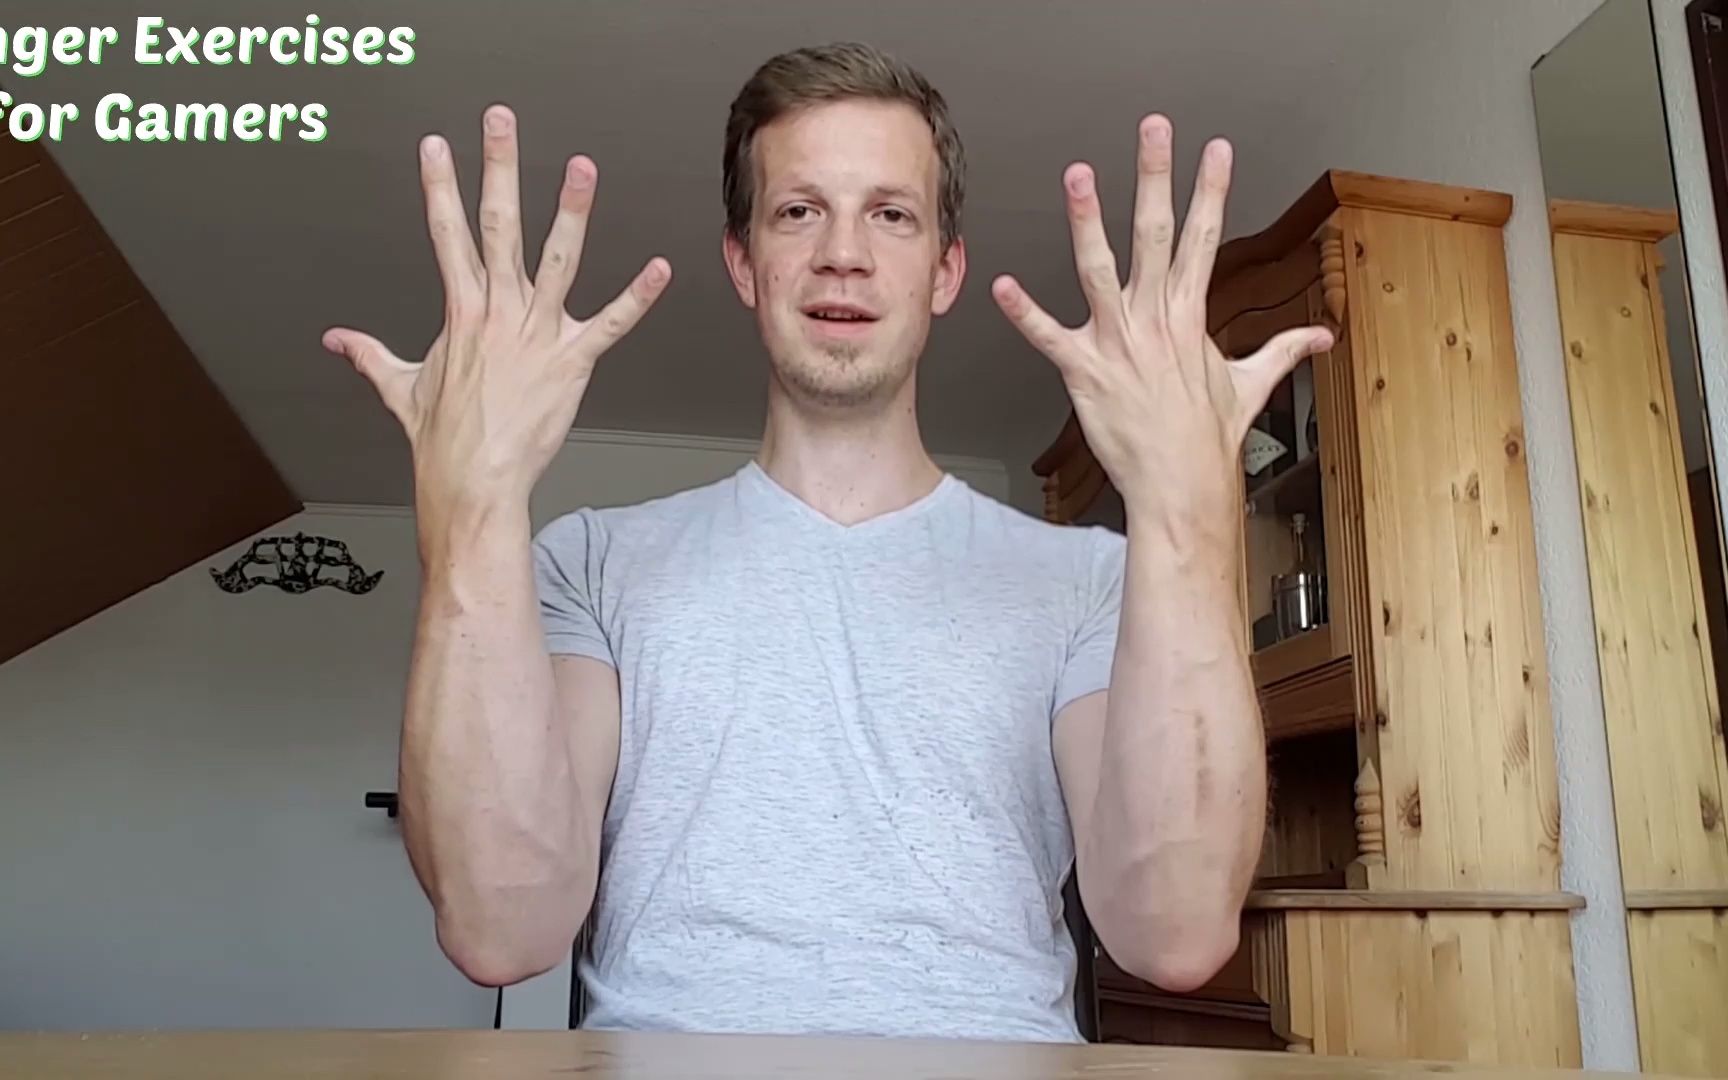 【中字翻译】游戏玩家的手部运动热身 | Hand Exercises for Gamers